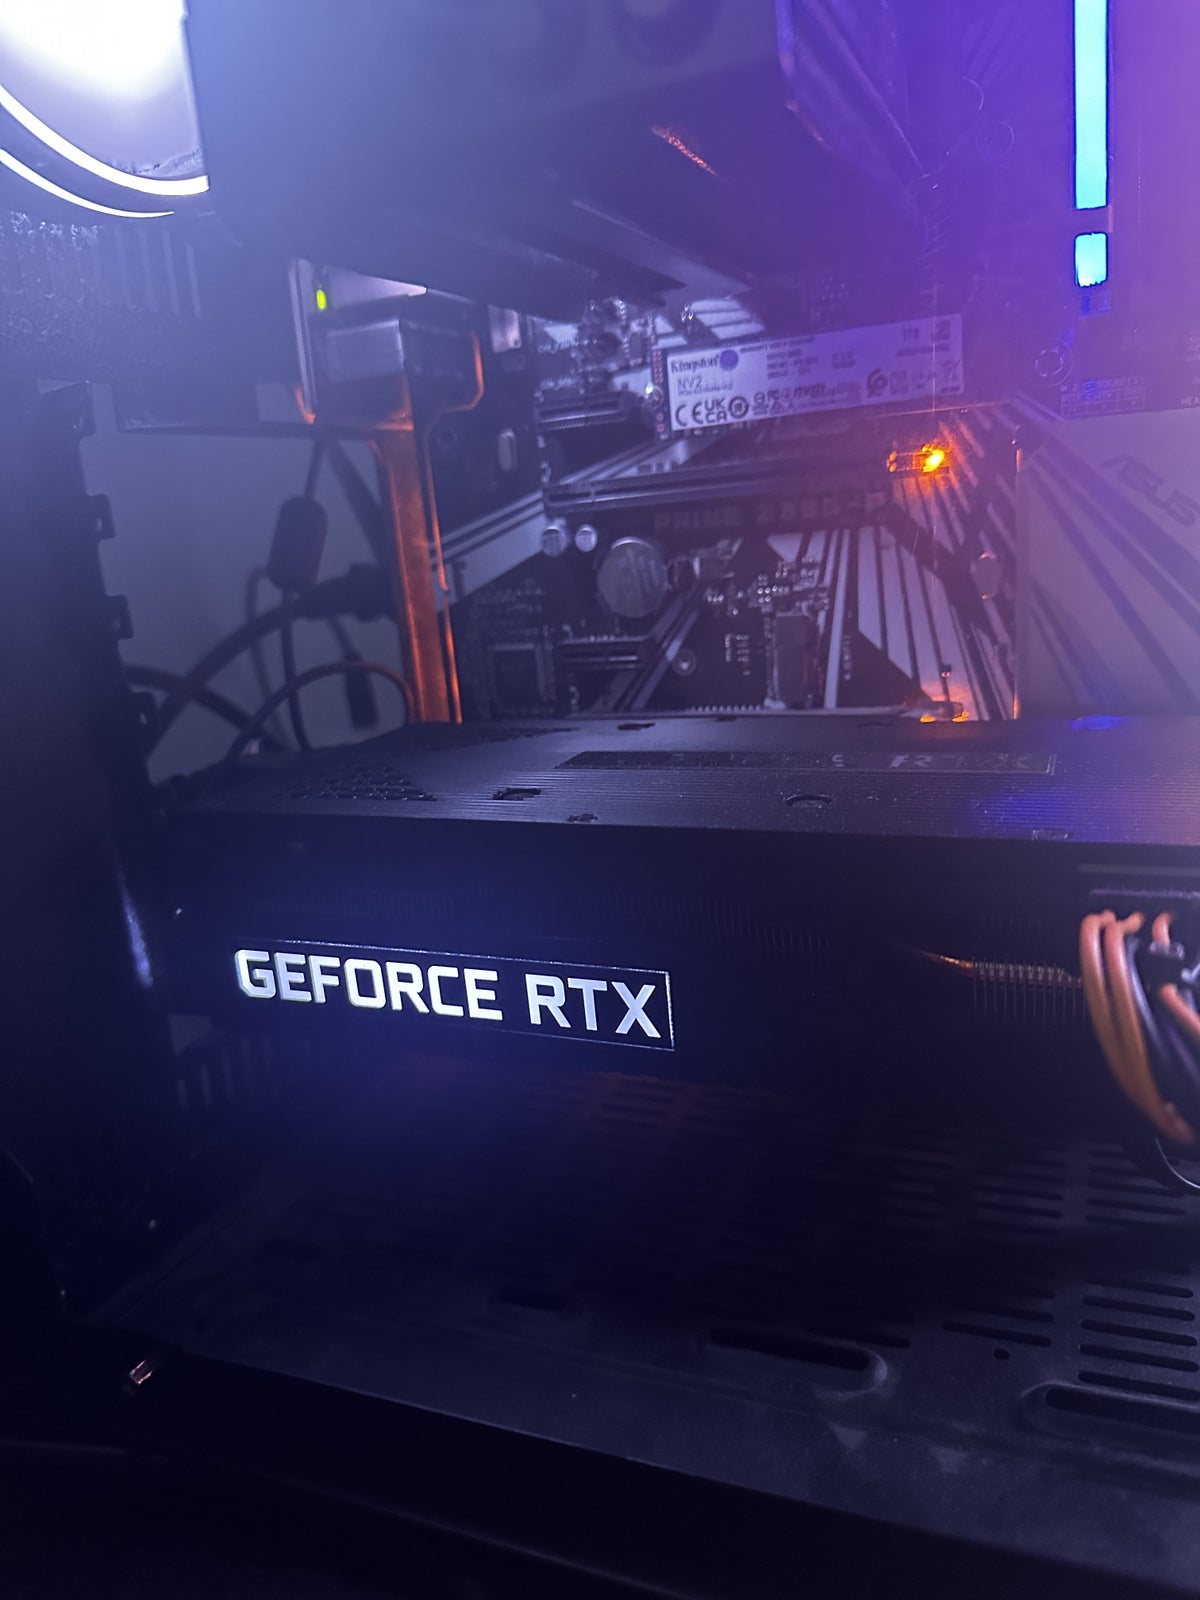 Gefore RTX 3080 Nvidia, 10 GB RAM, God